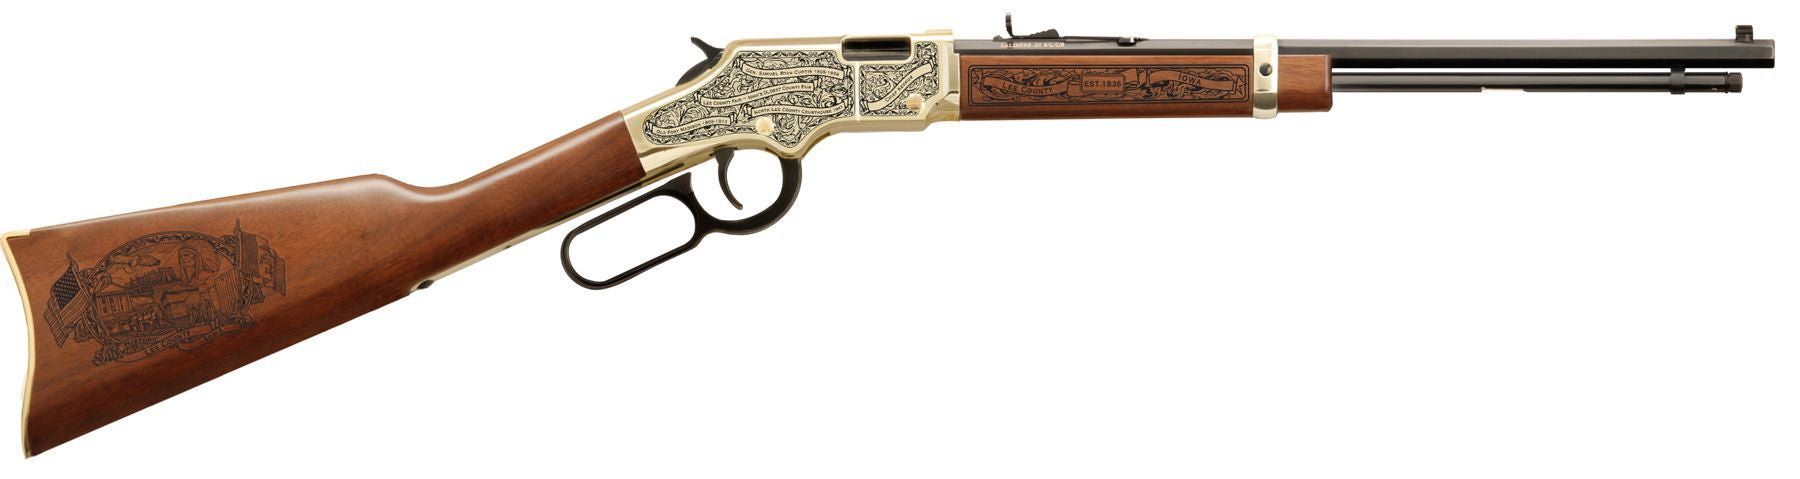 Lee county iowa engraved rifle H004